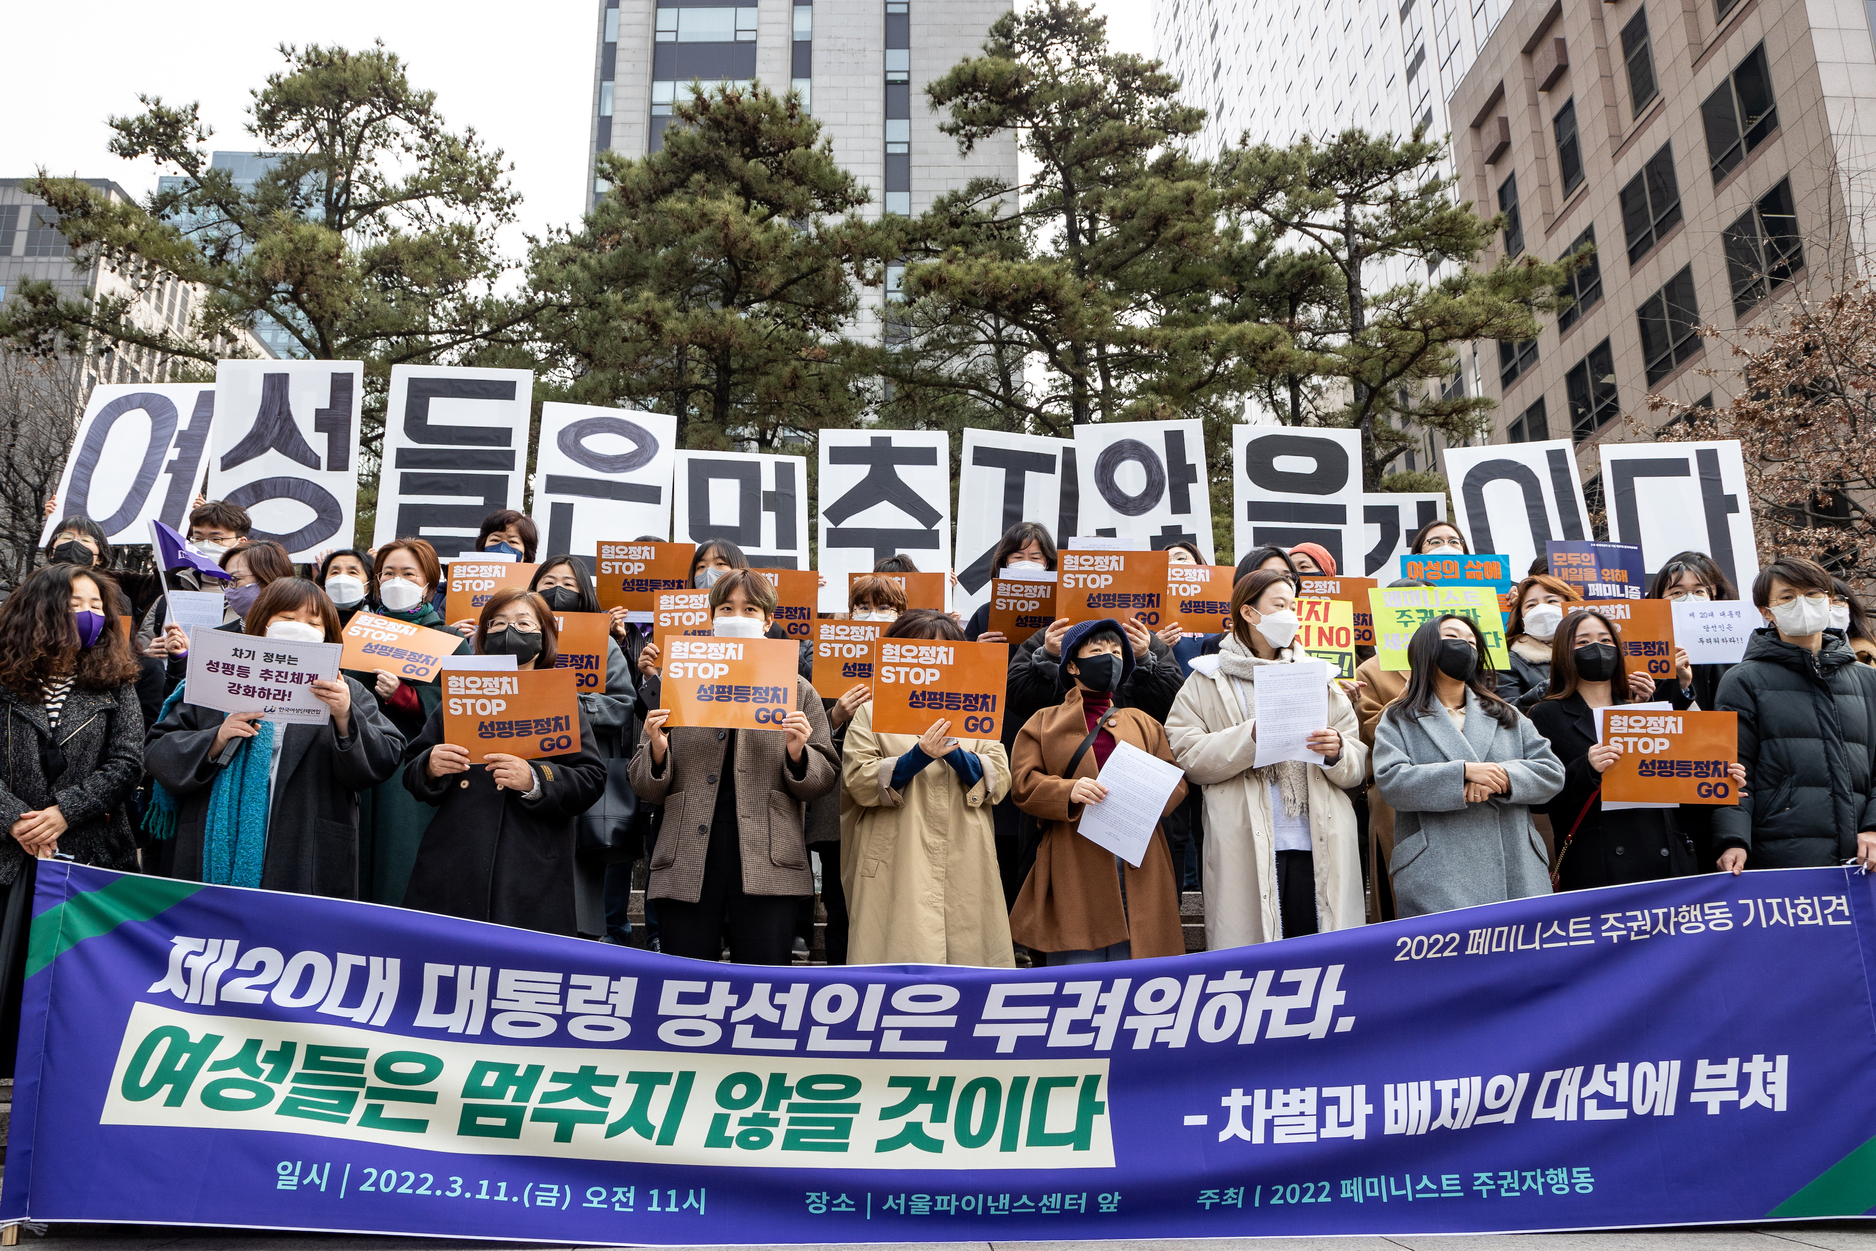 South Koreas misogyny problem East Asia Forum